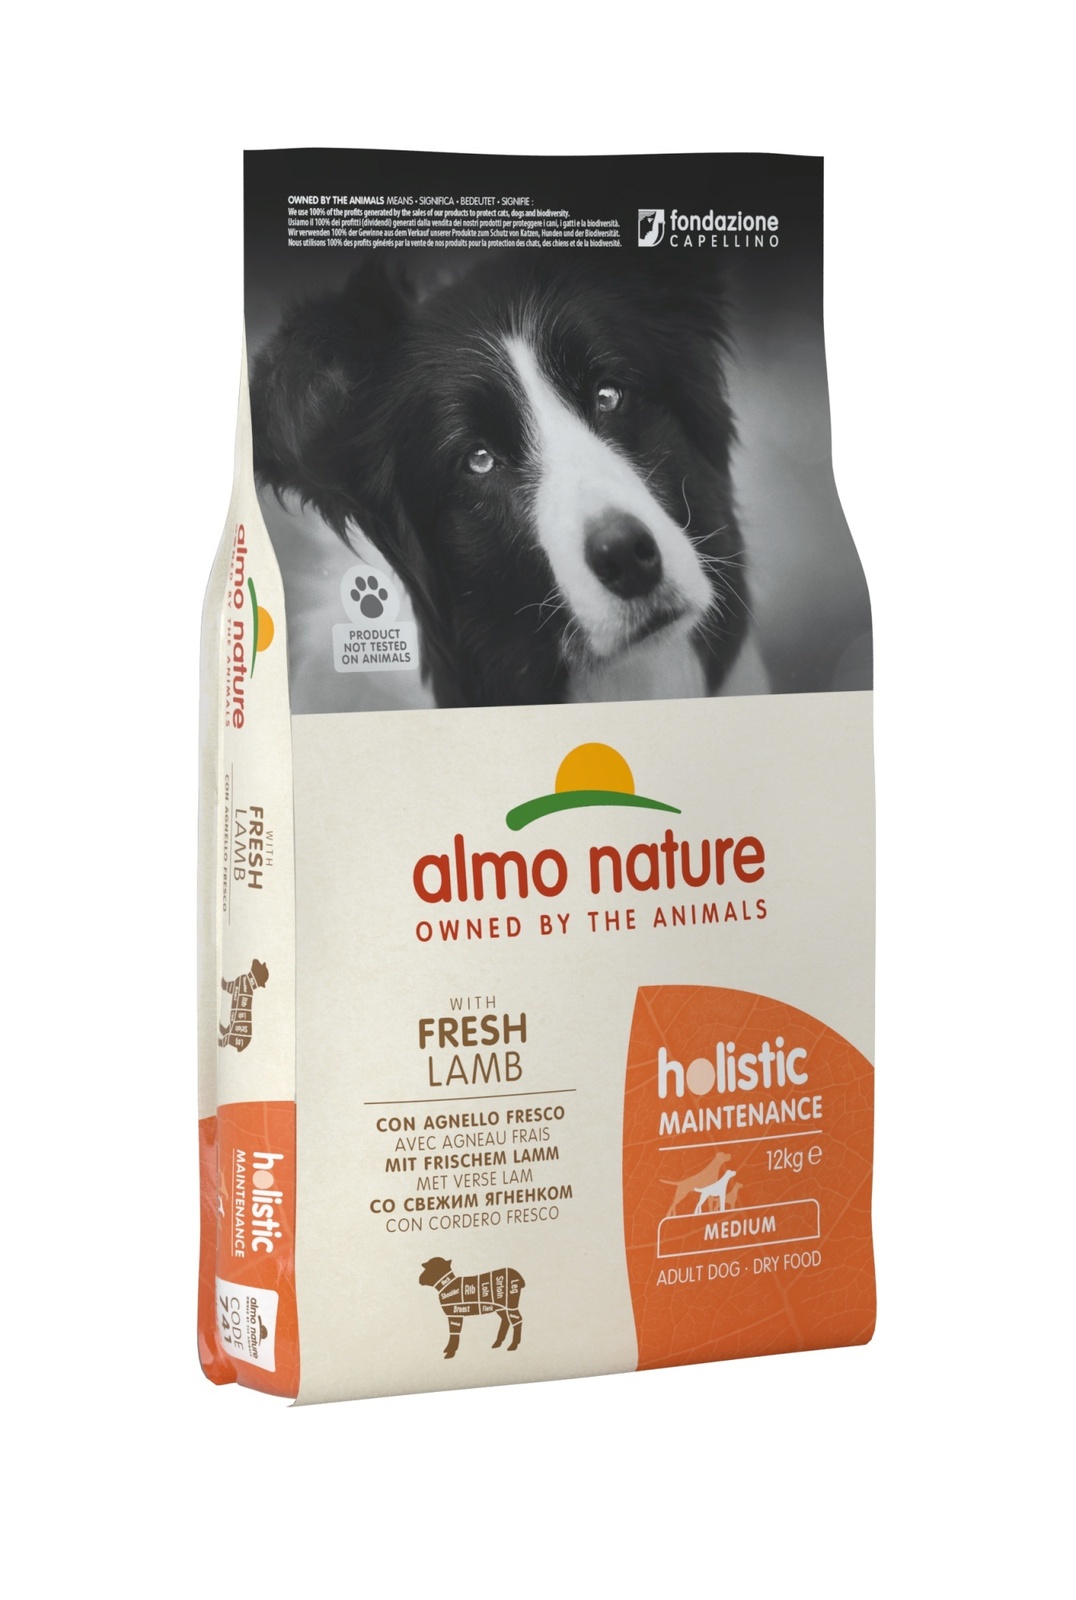 фото Сухой корм для собак almo nature holistic medium, рис, ягненок, 2кг